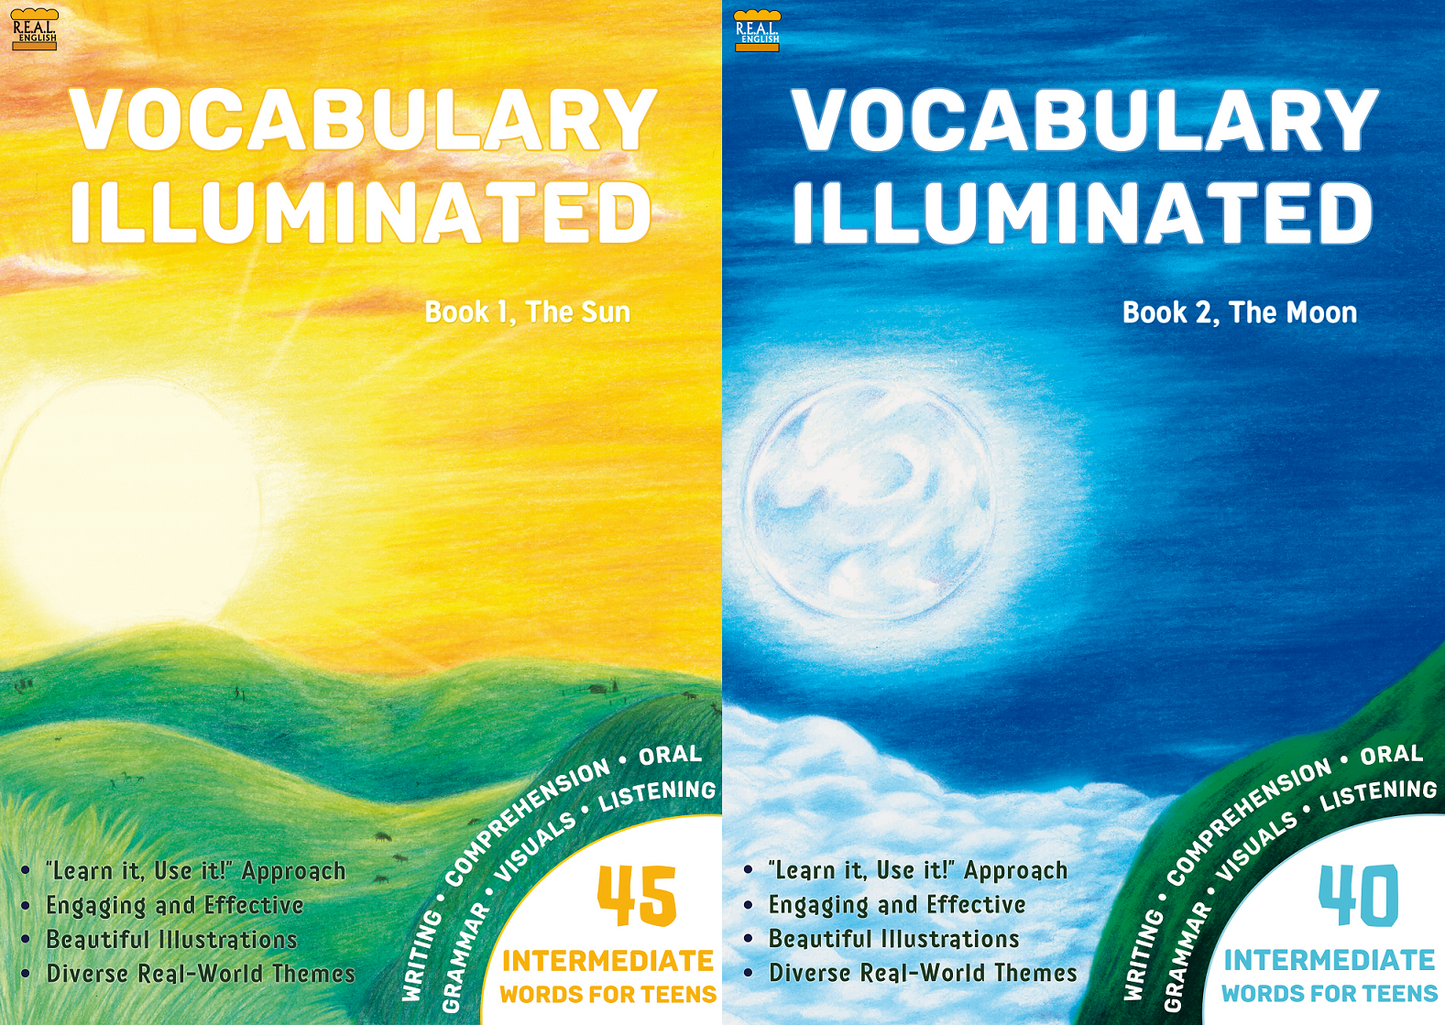 Vocabulary Illuminated: Book 3, The Stars